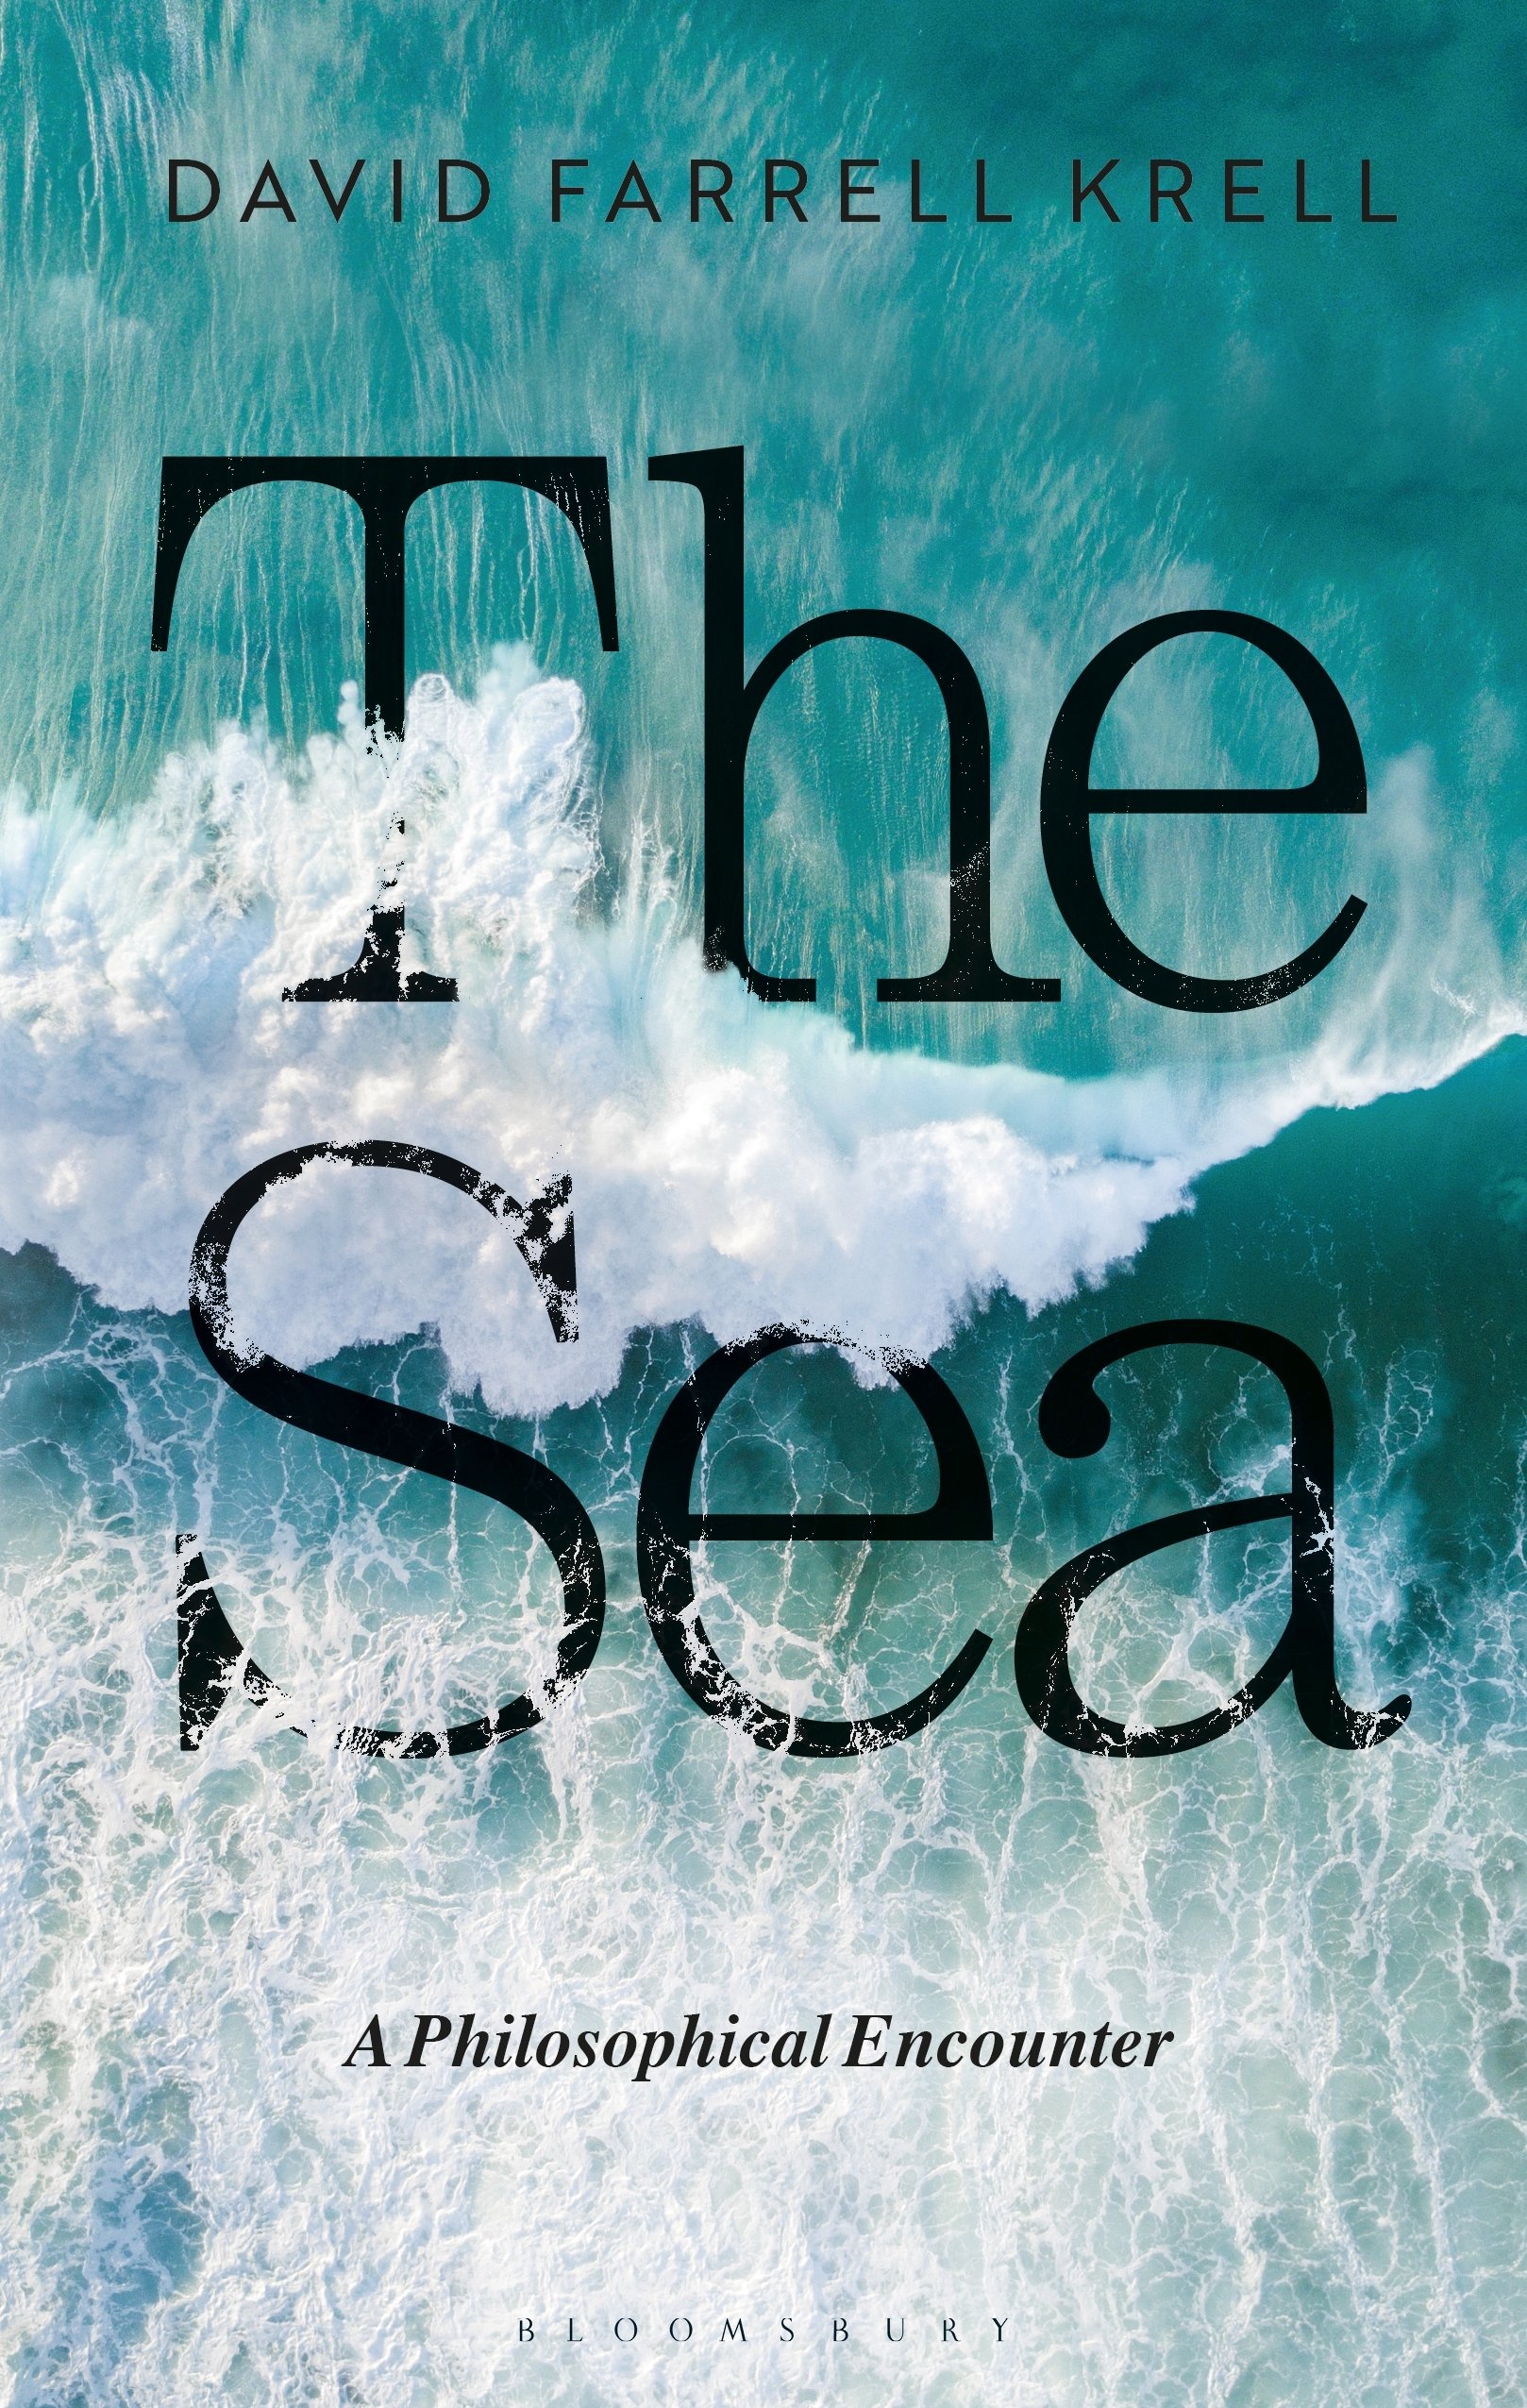 The Sea : A Philosophical Encounter | David Farrell Krell image1